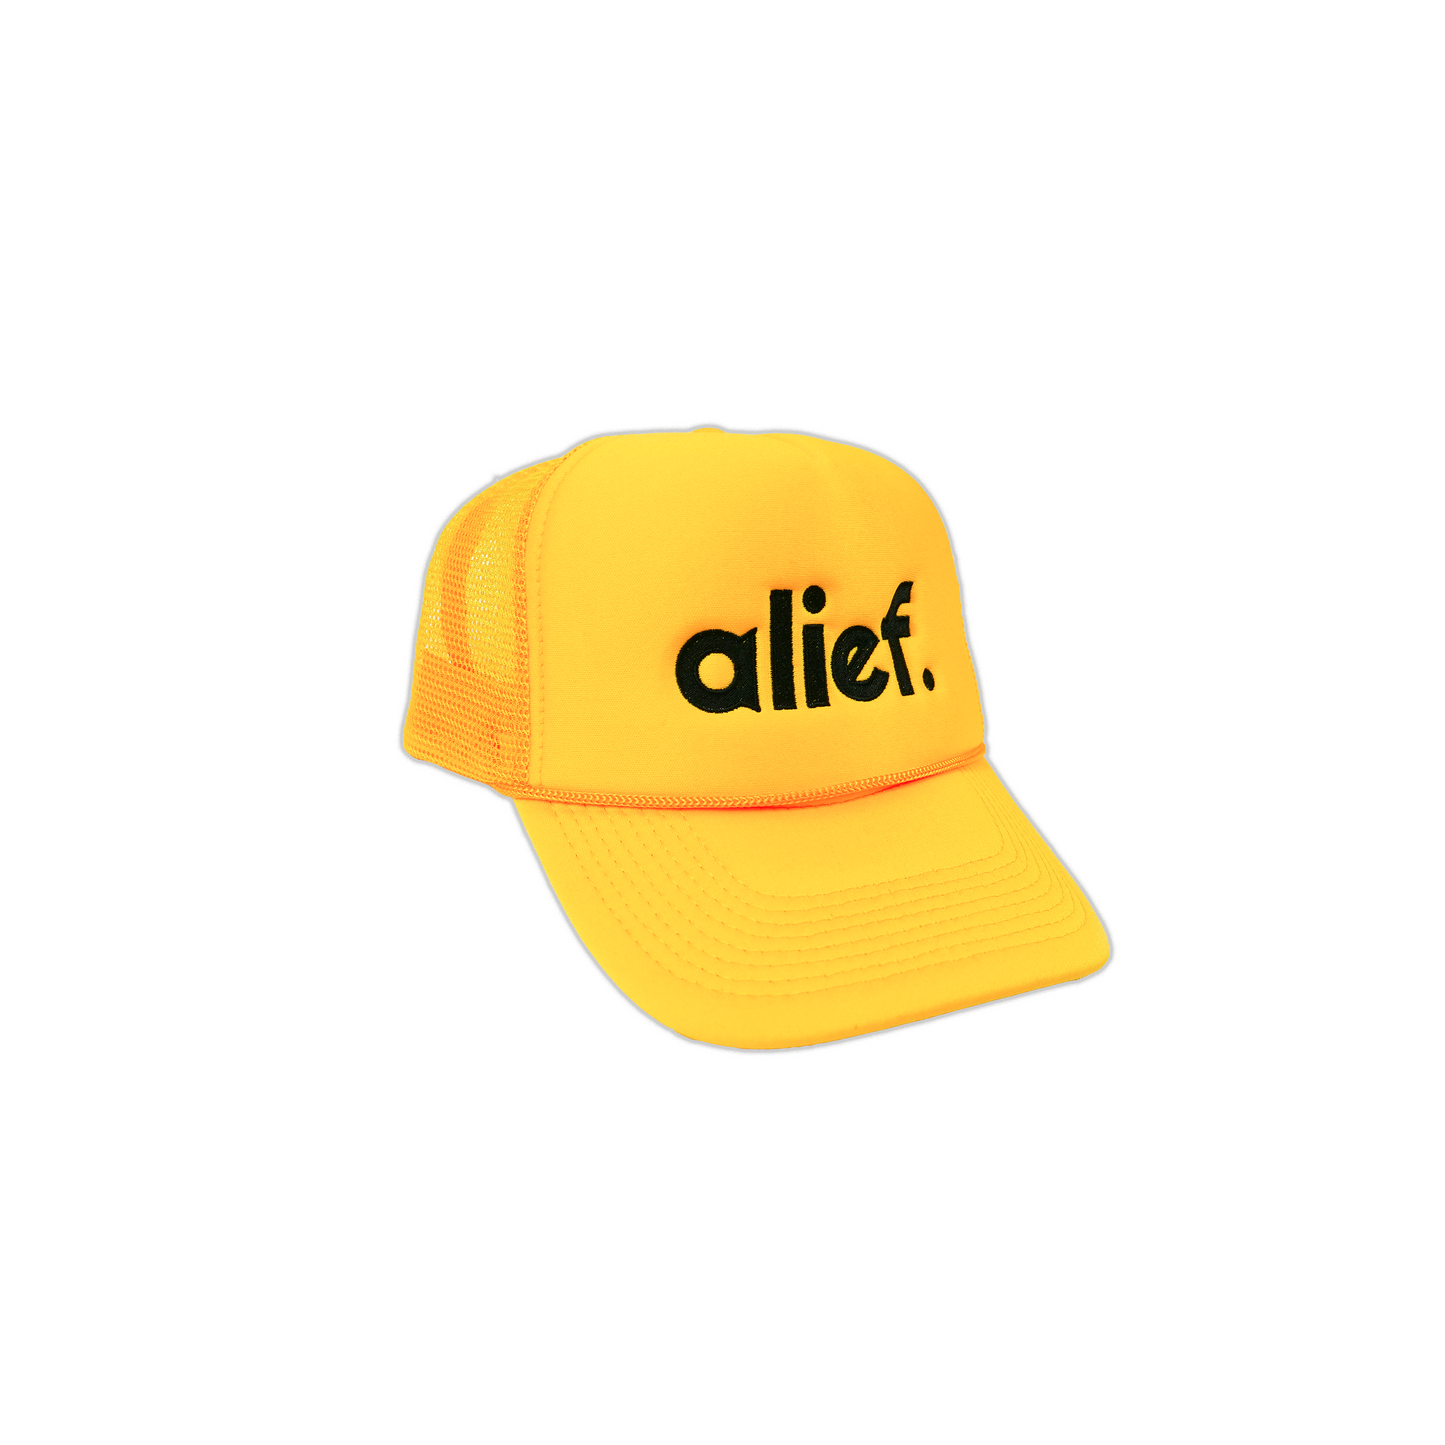 Bold Alief Trucker Hat - Yellow/Black